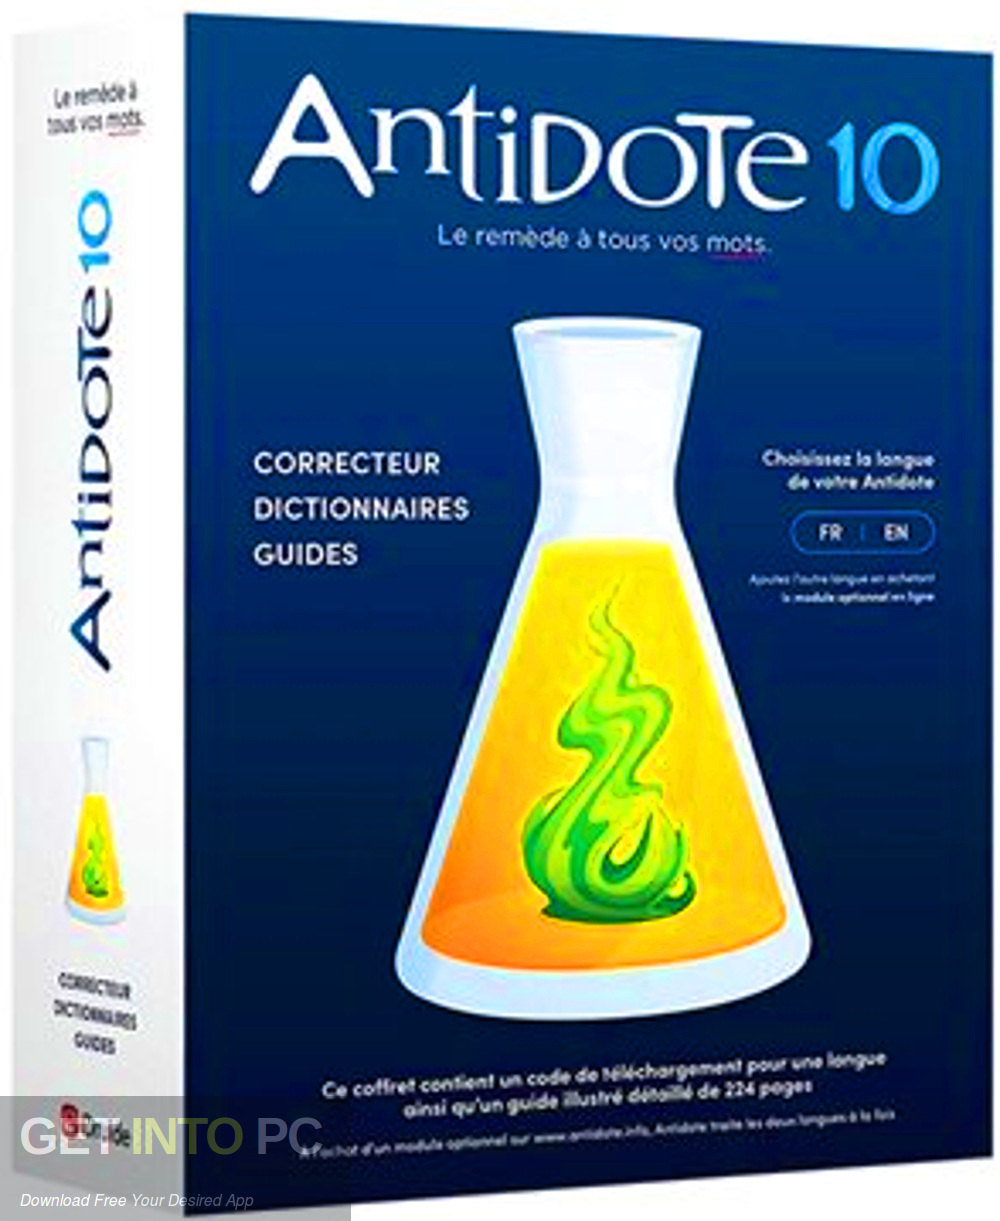 Antidote 10 Free Download GetintoPC.com